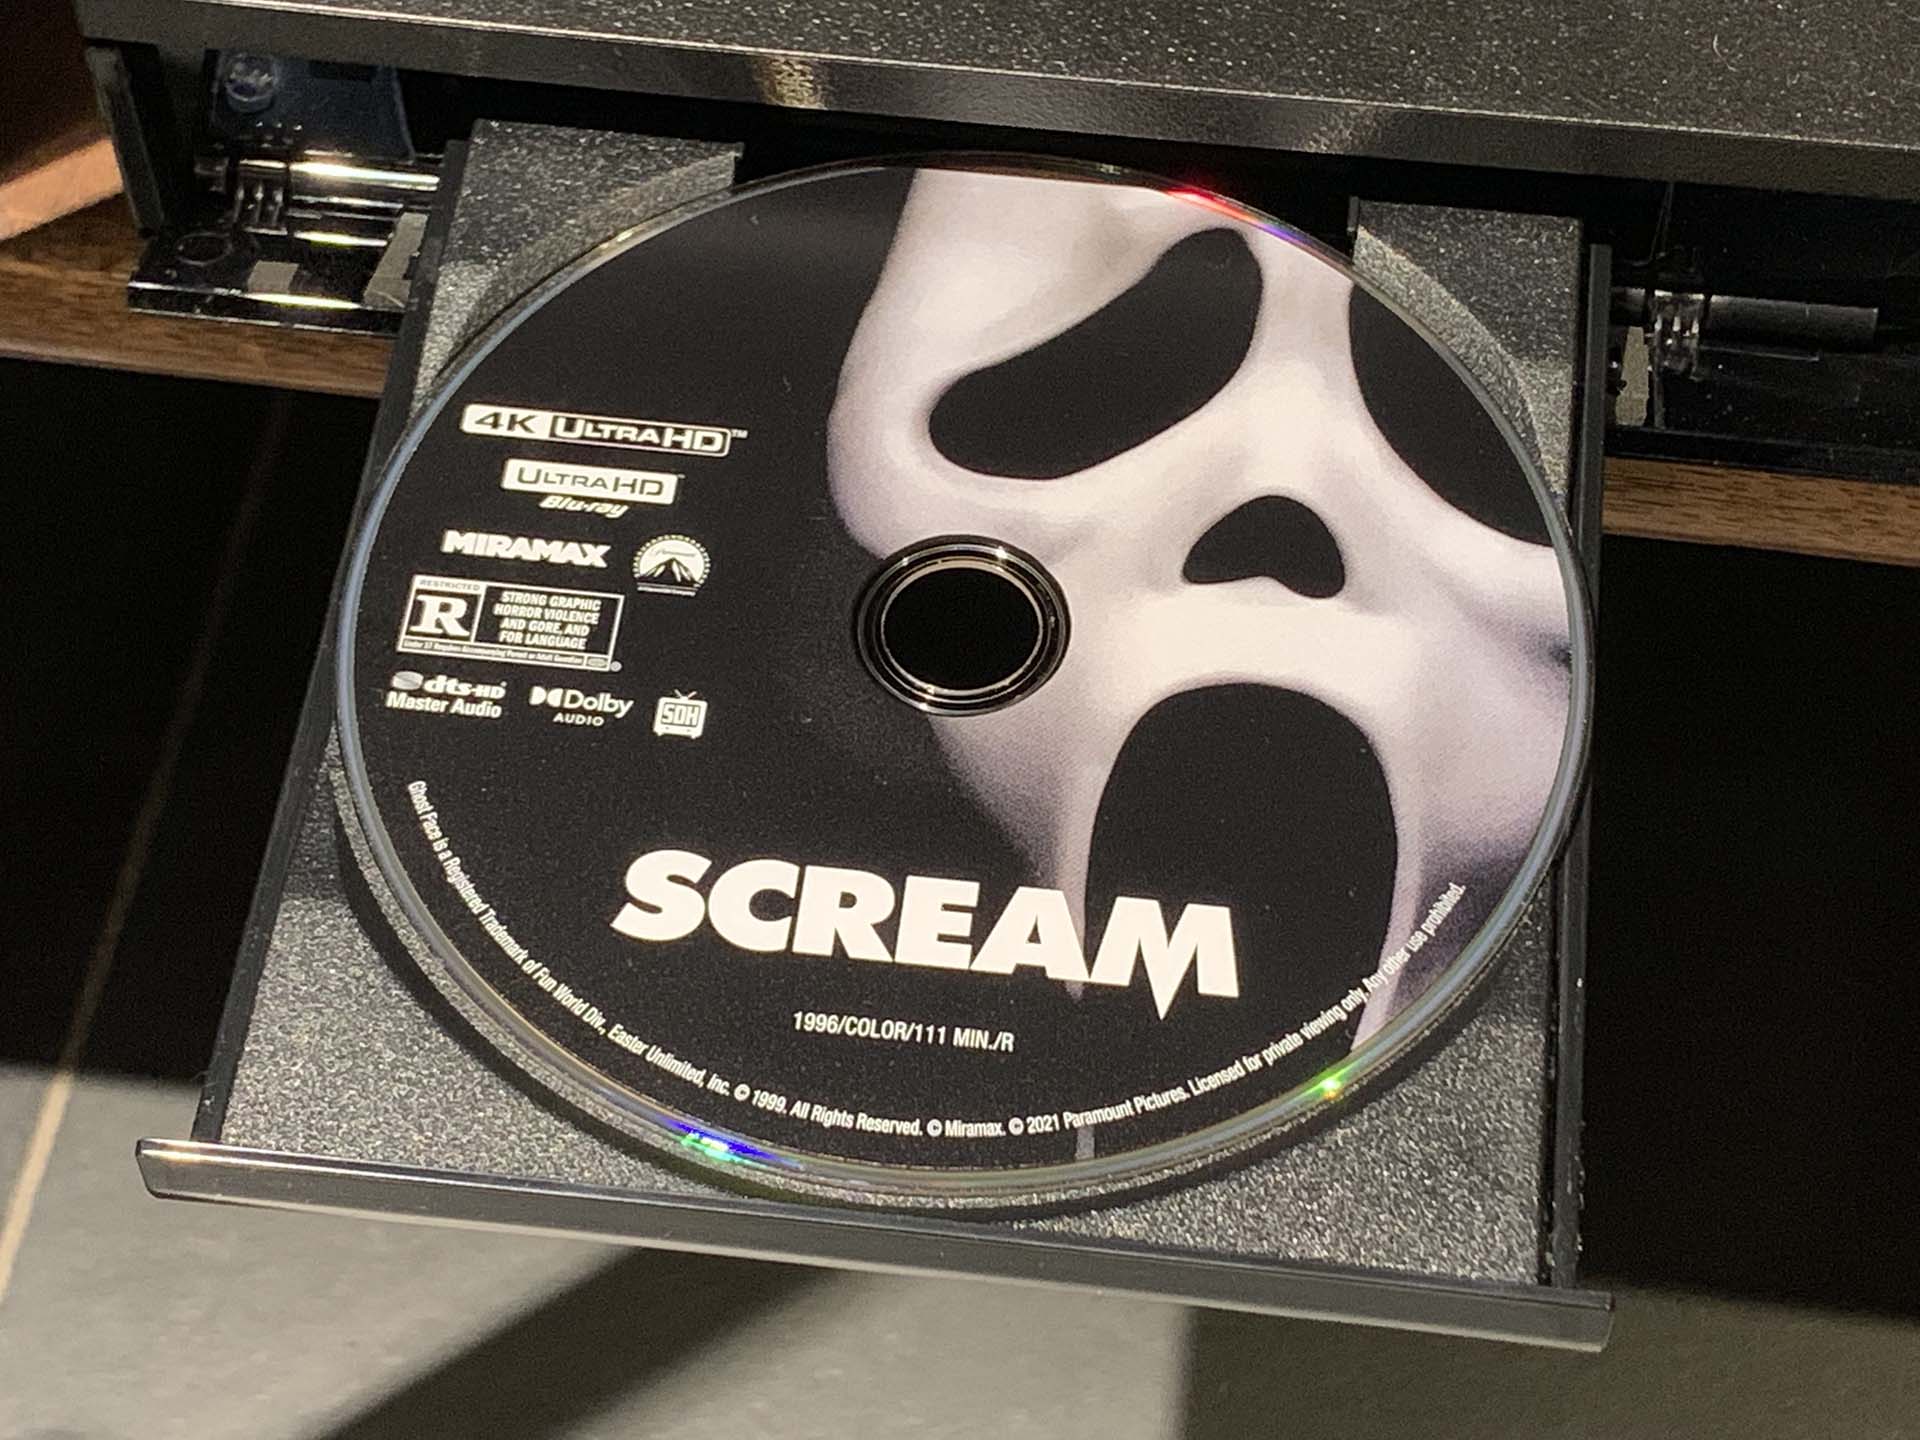 scream-4k-disc-player-1920